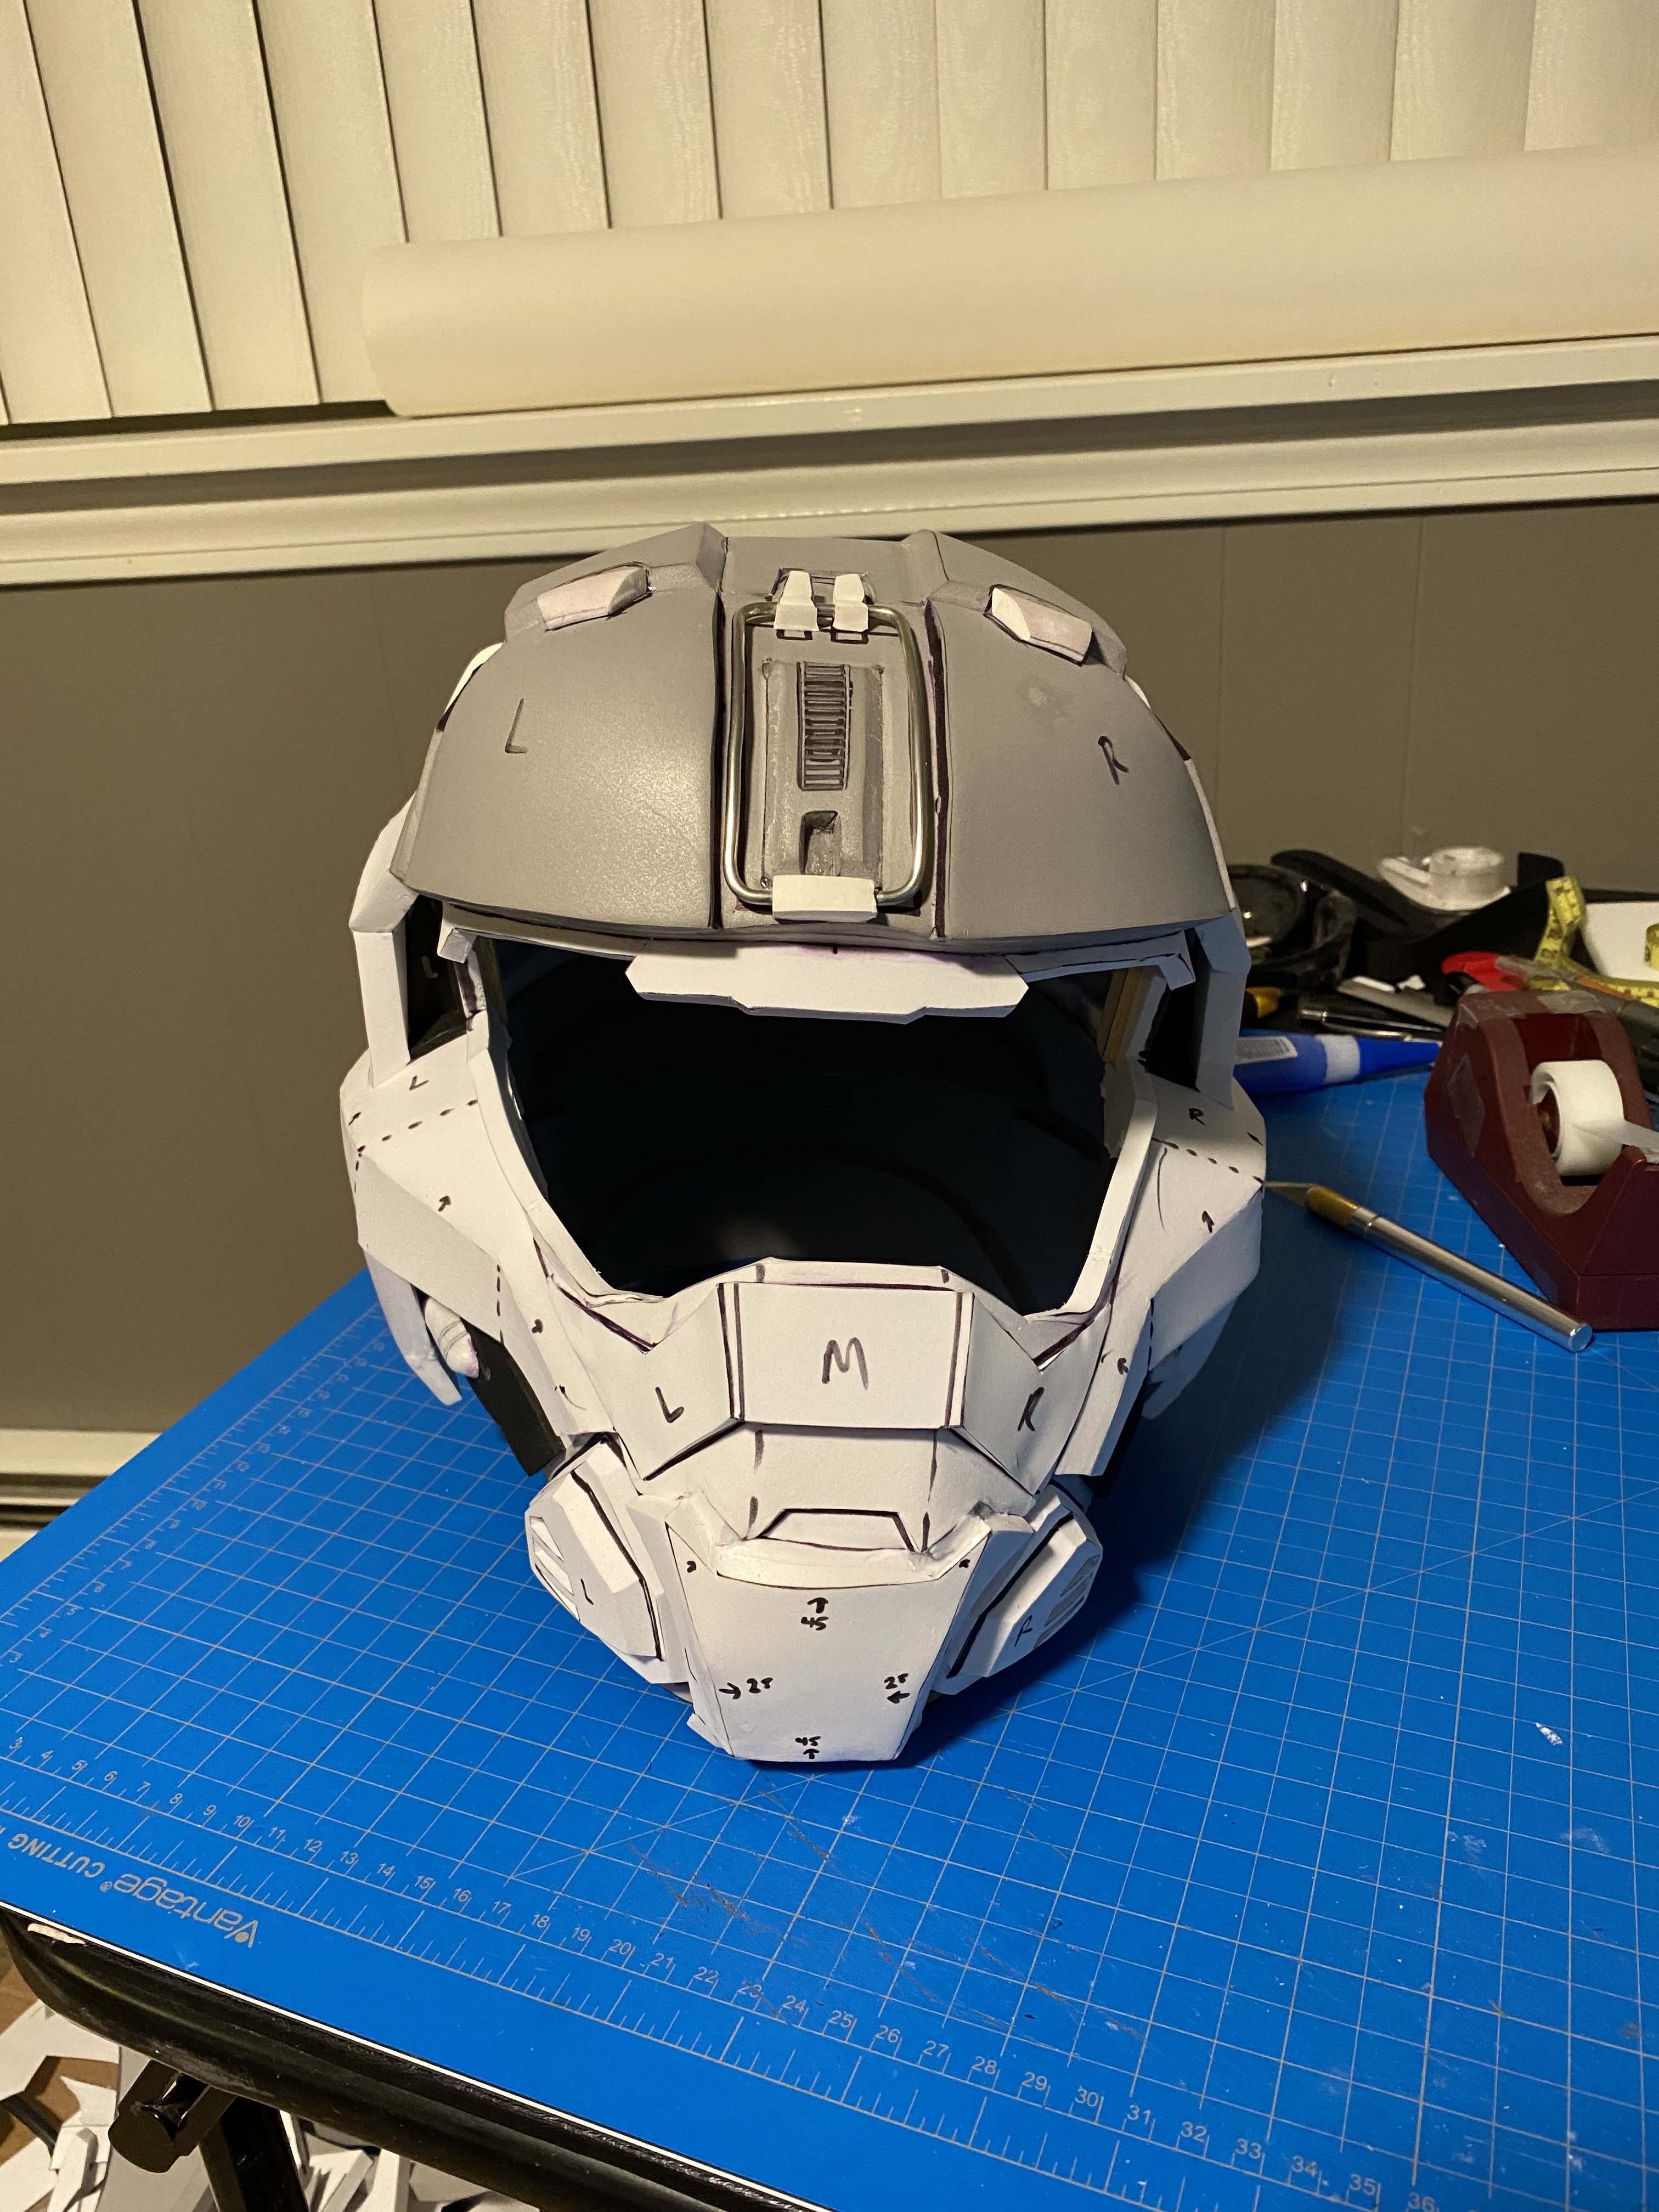 Foam - My Fourth Armor Set - Halo: Reach Foam Build | Halo Costume and ...